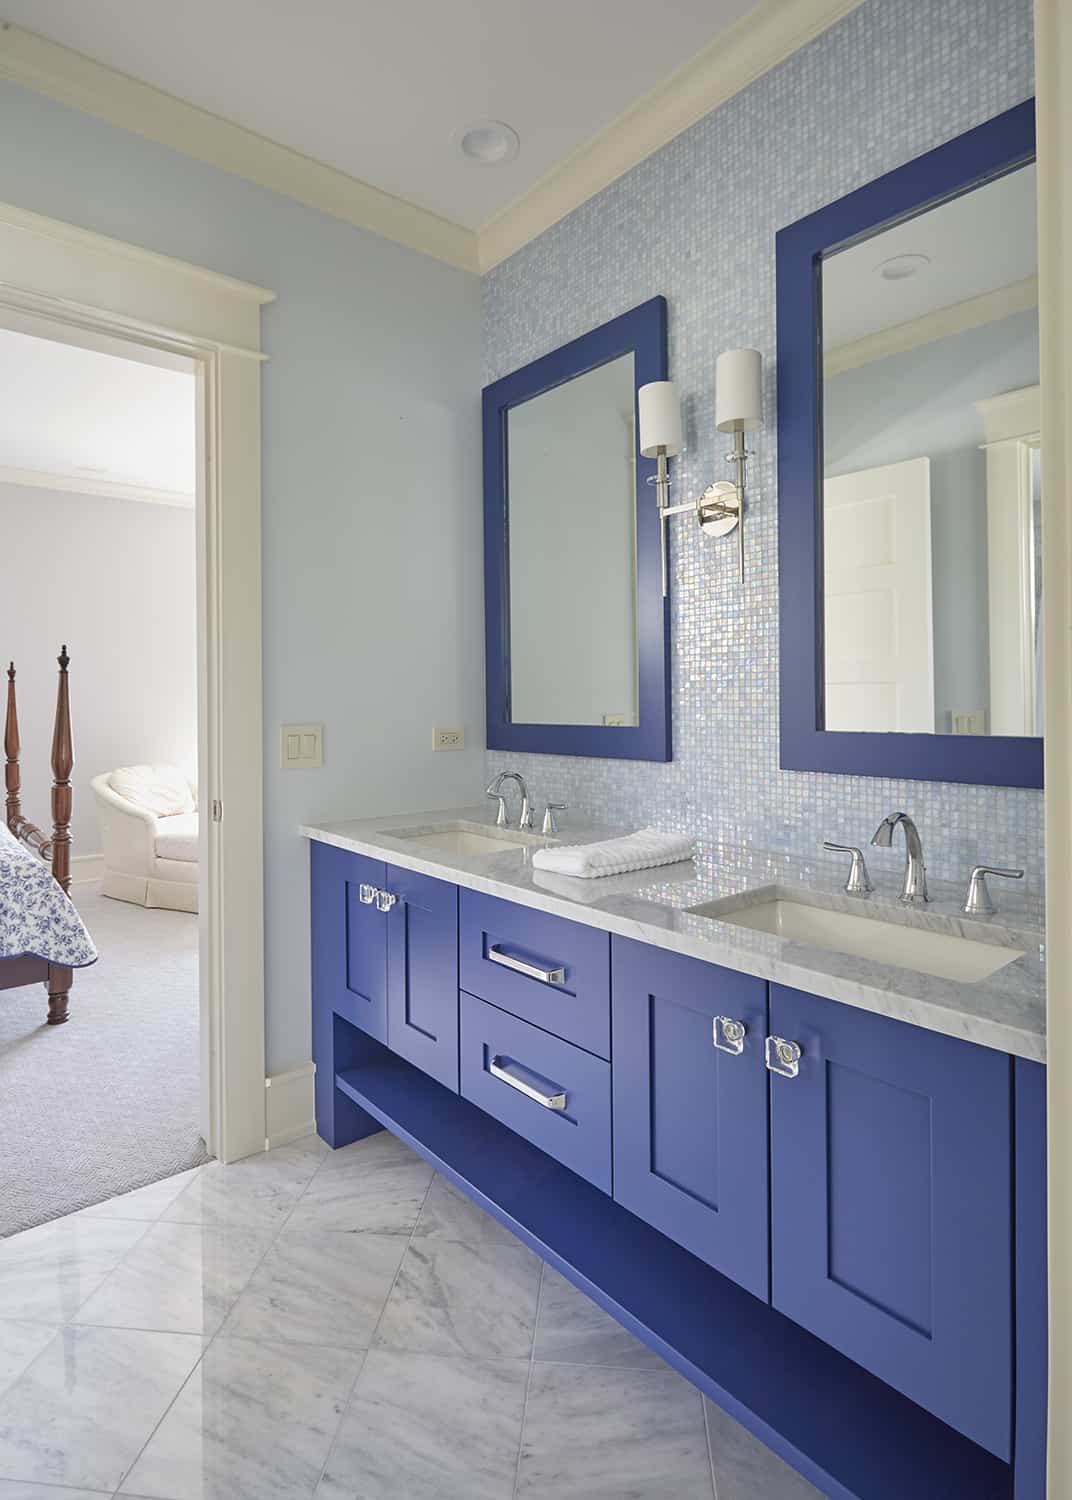 Bathroom Remodel / Design Photo Gallery & Ideas - Chicago